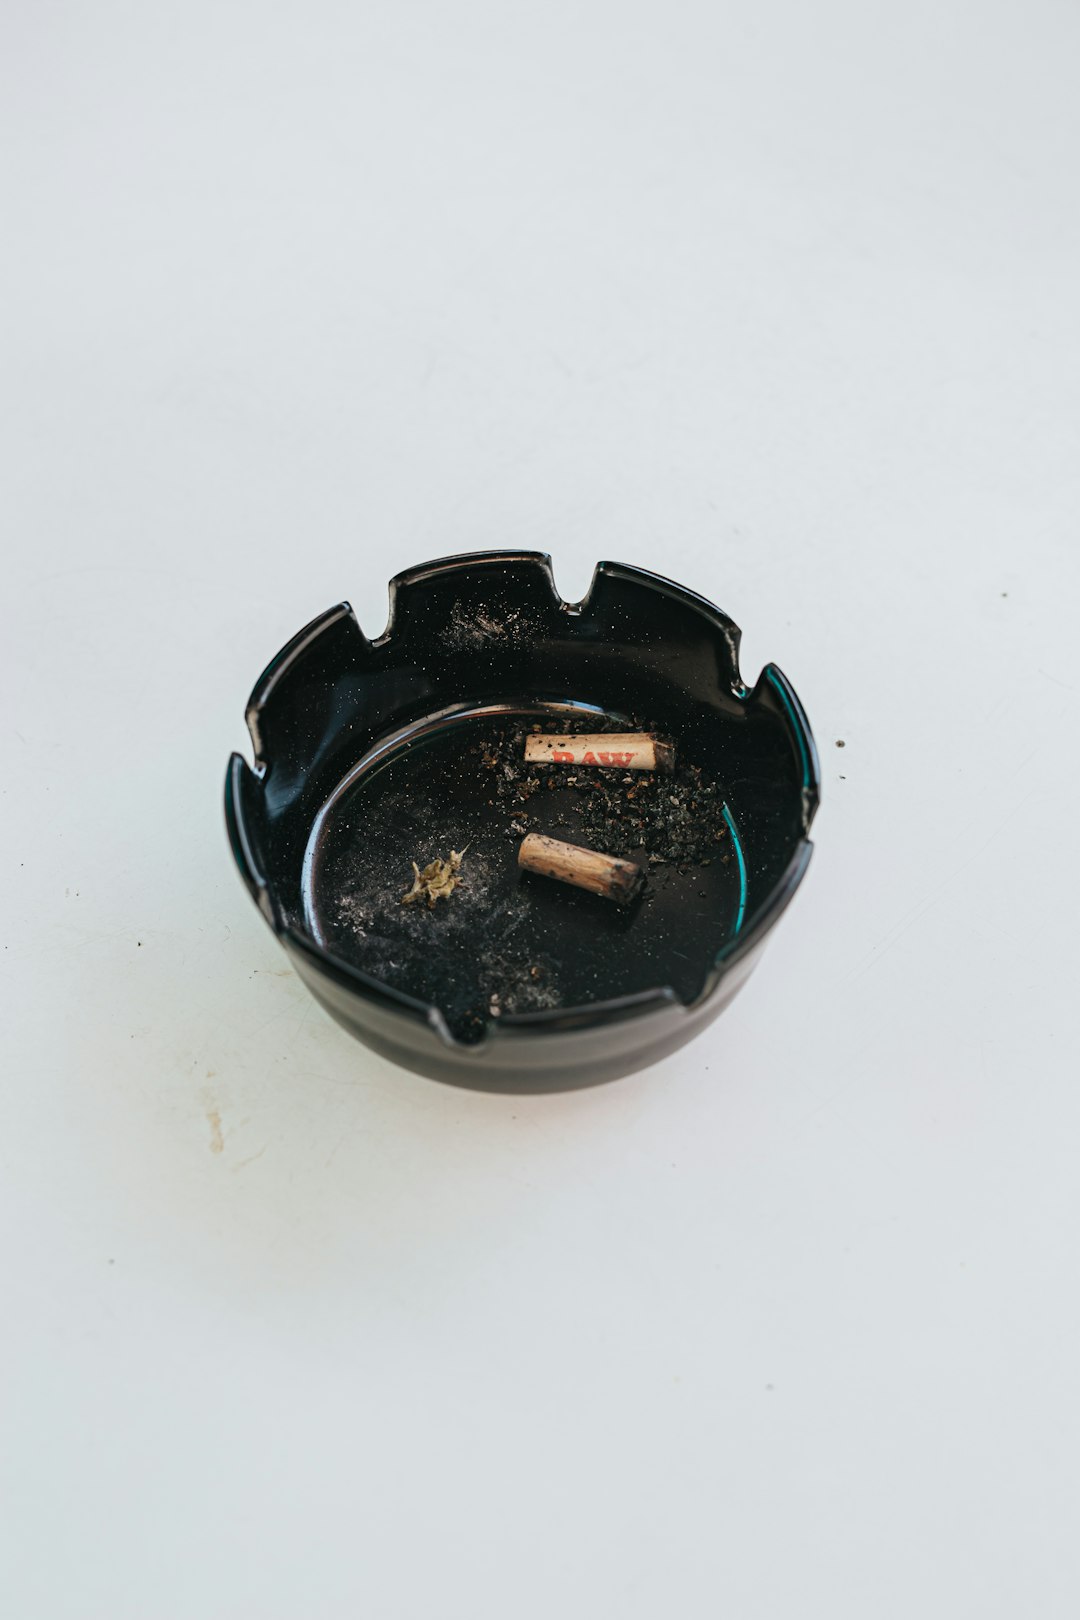 cigarette butts on black round ashtray